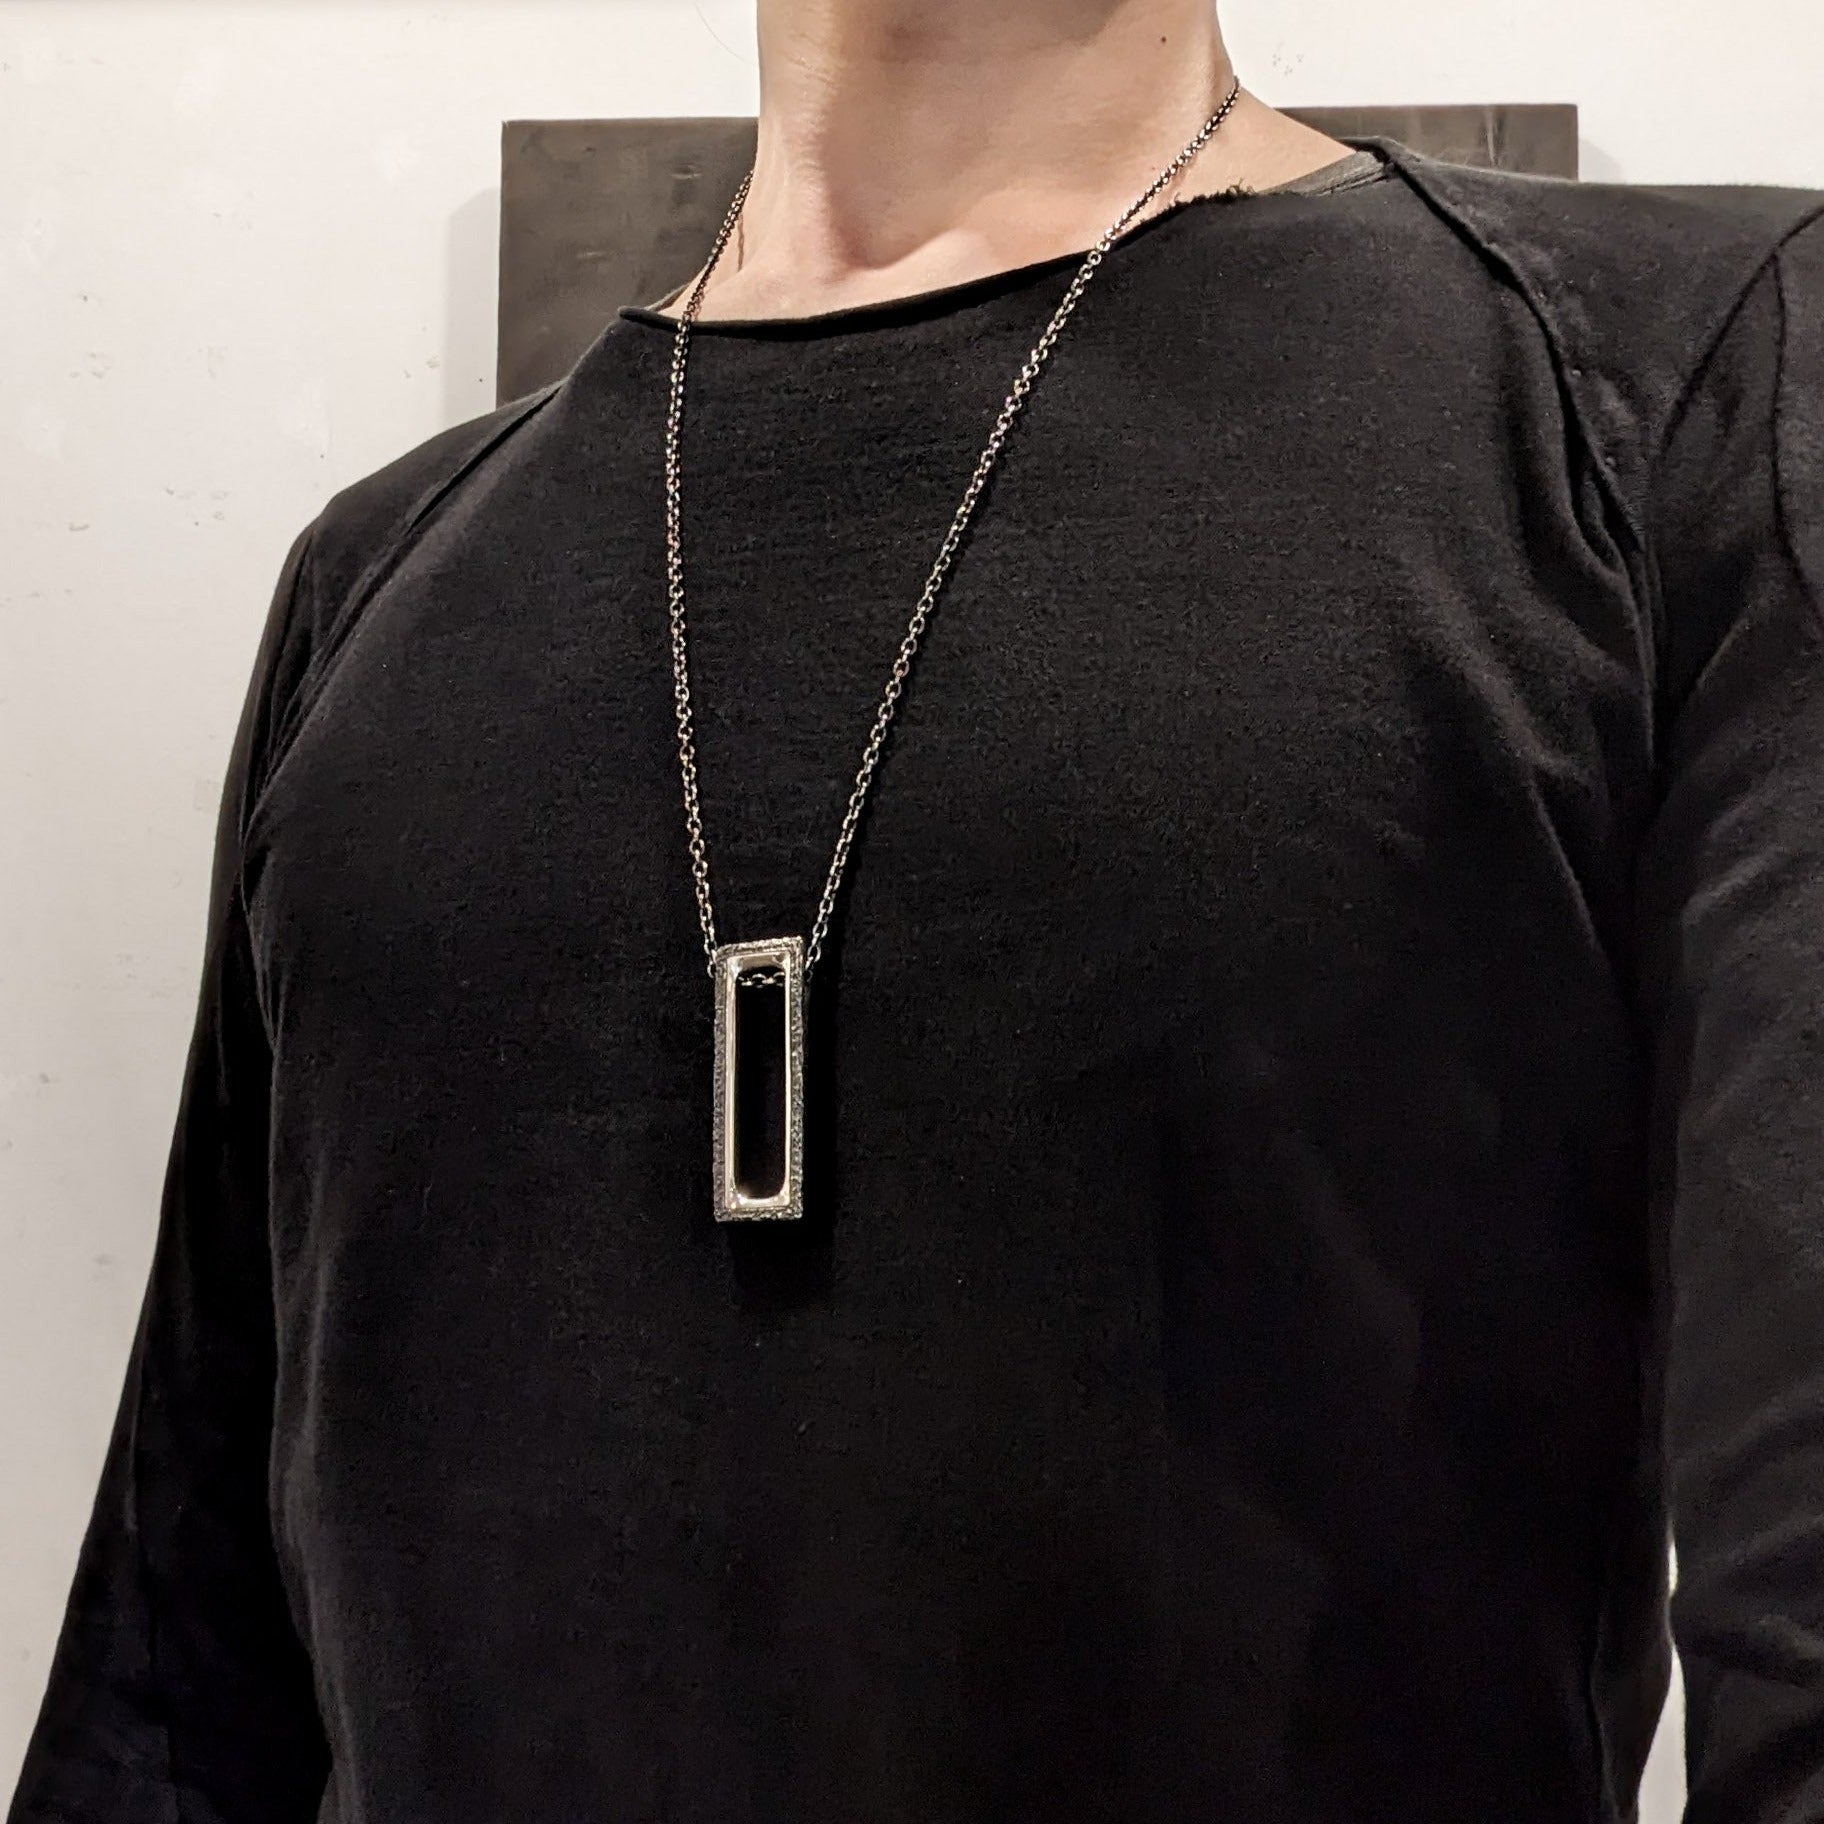 essence - Silver necklace with original clasp